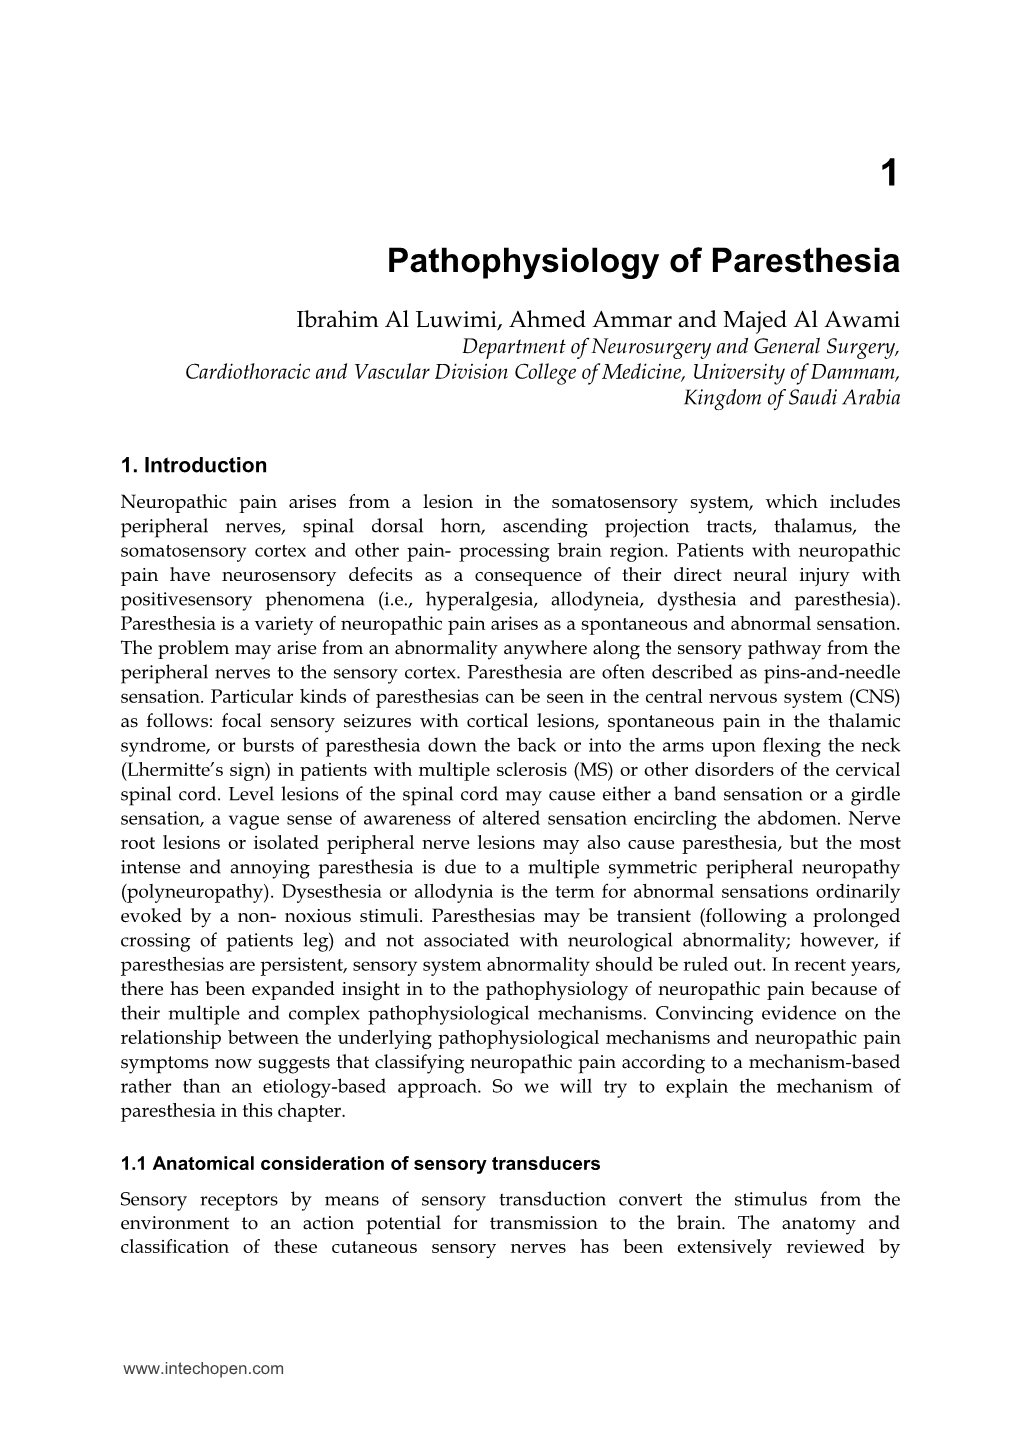 Pathophysiology of Paresthesia